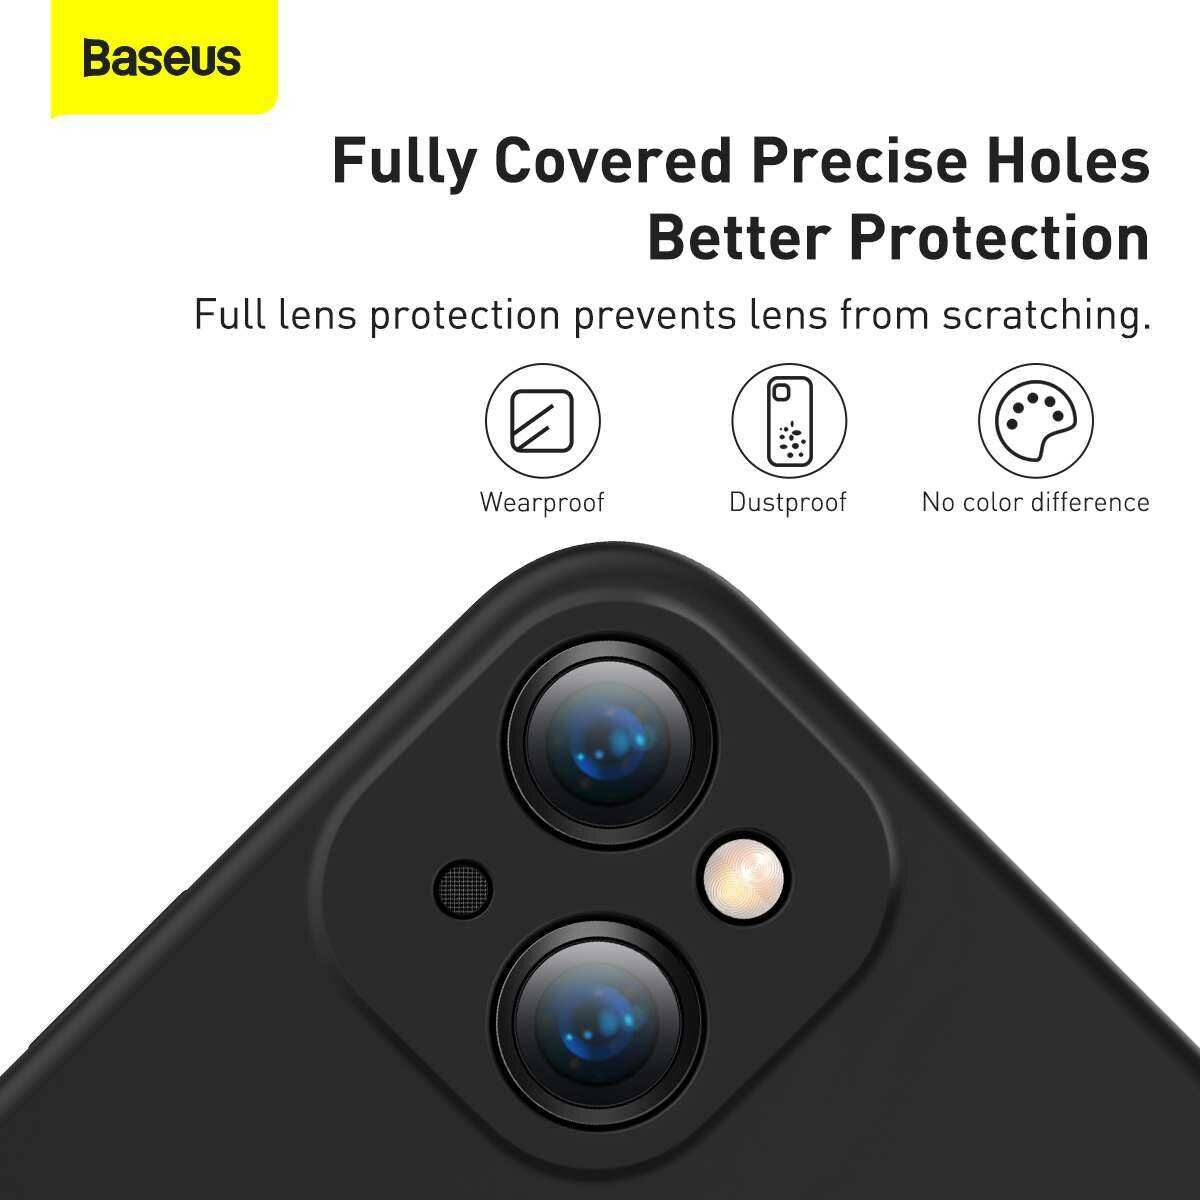 Baseus iPhone 13 tok, Liquid Silica Gel Protective, fekete (ARYT000001)